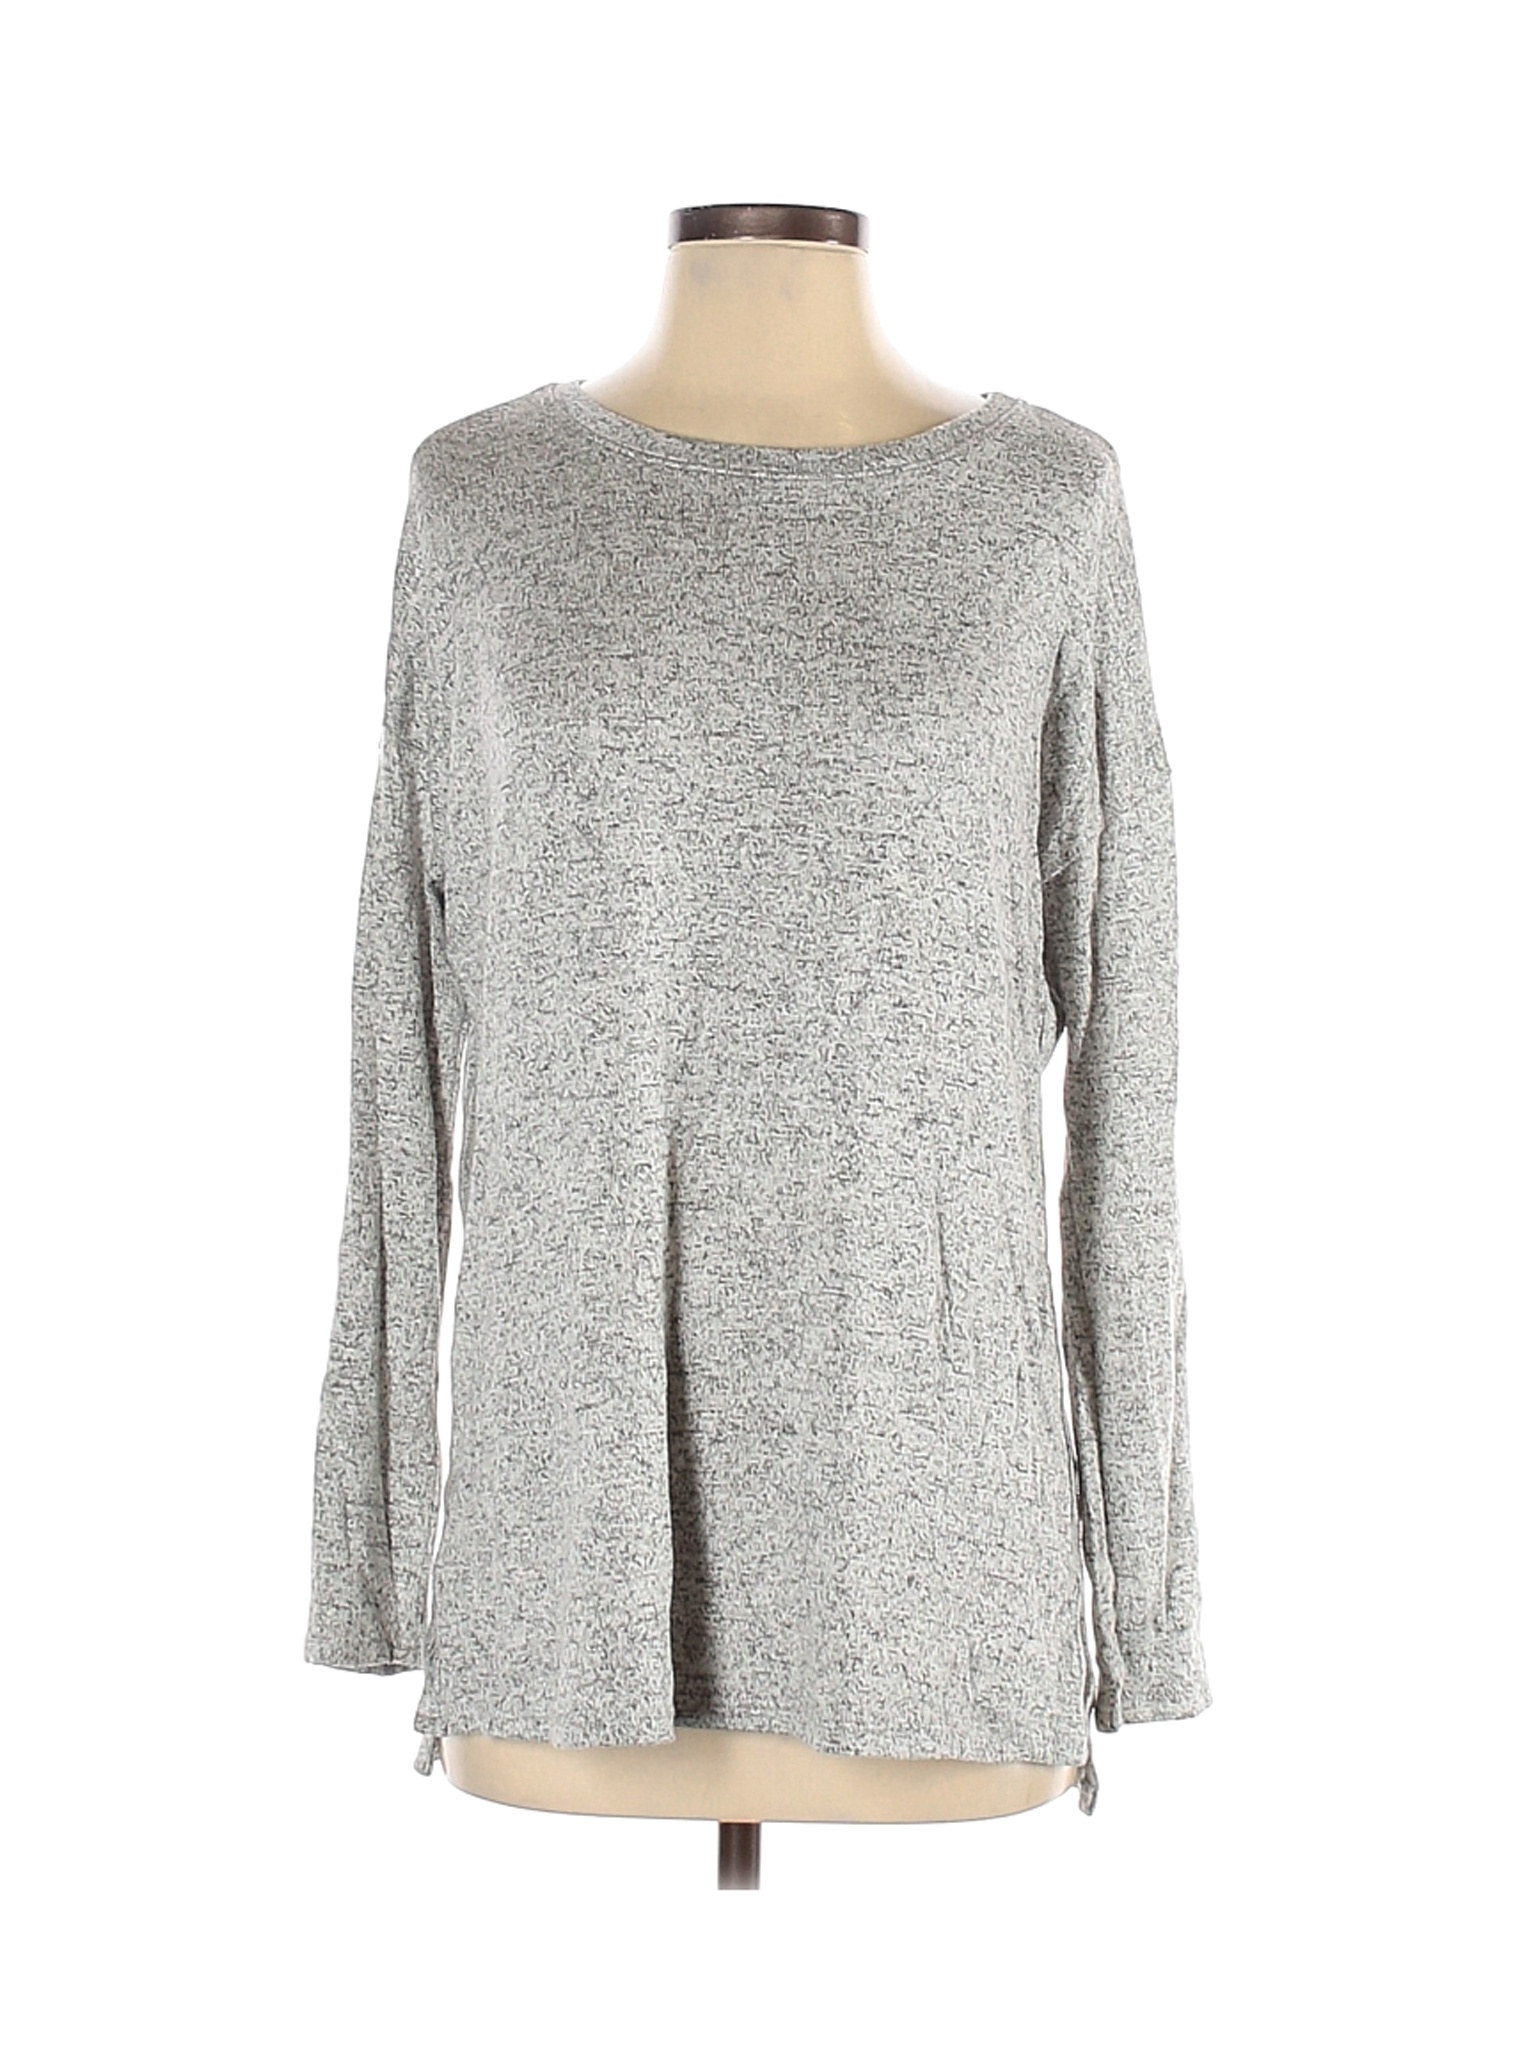 Market and Spruce Women Gray Long Sleeve Top S | eBay